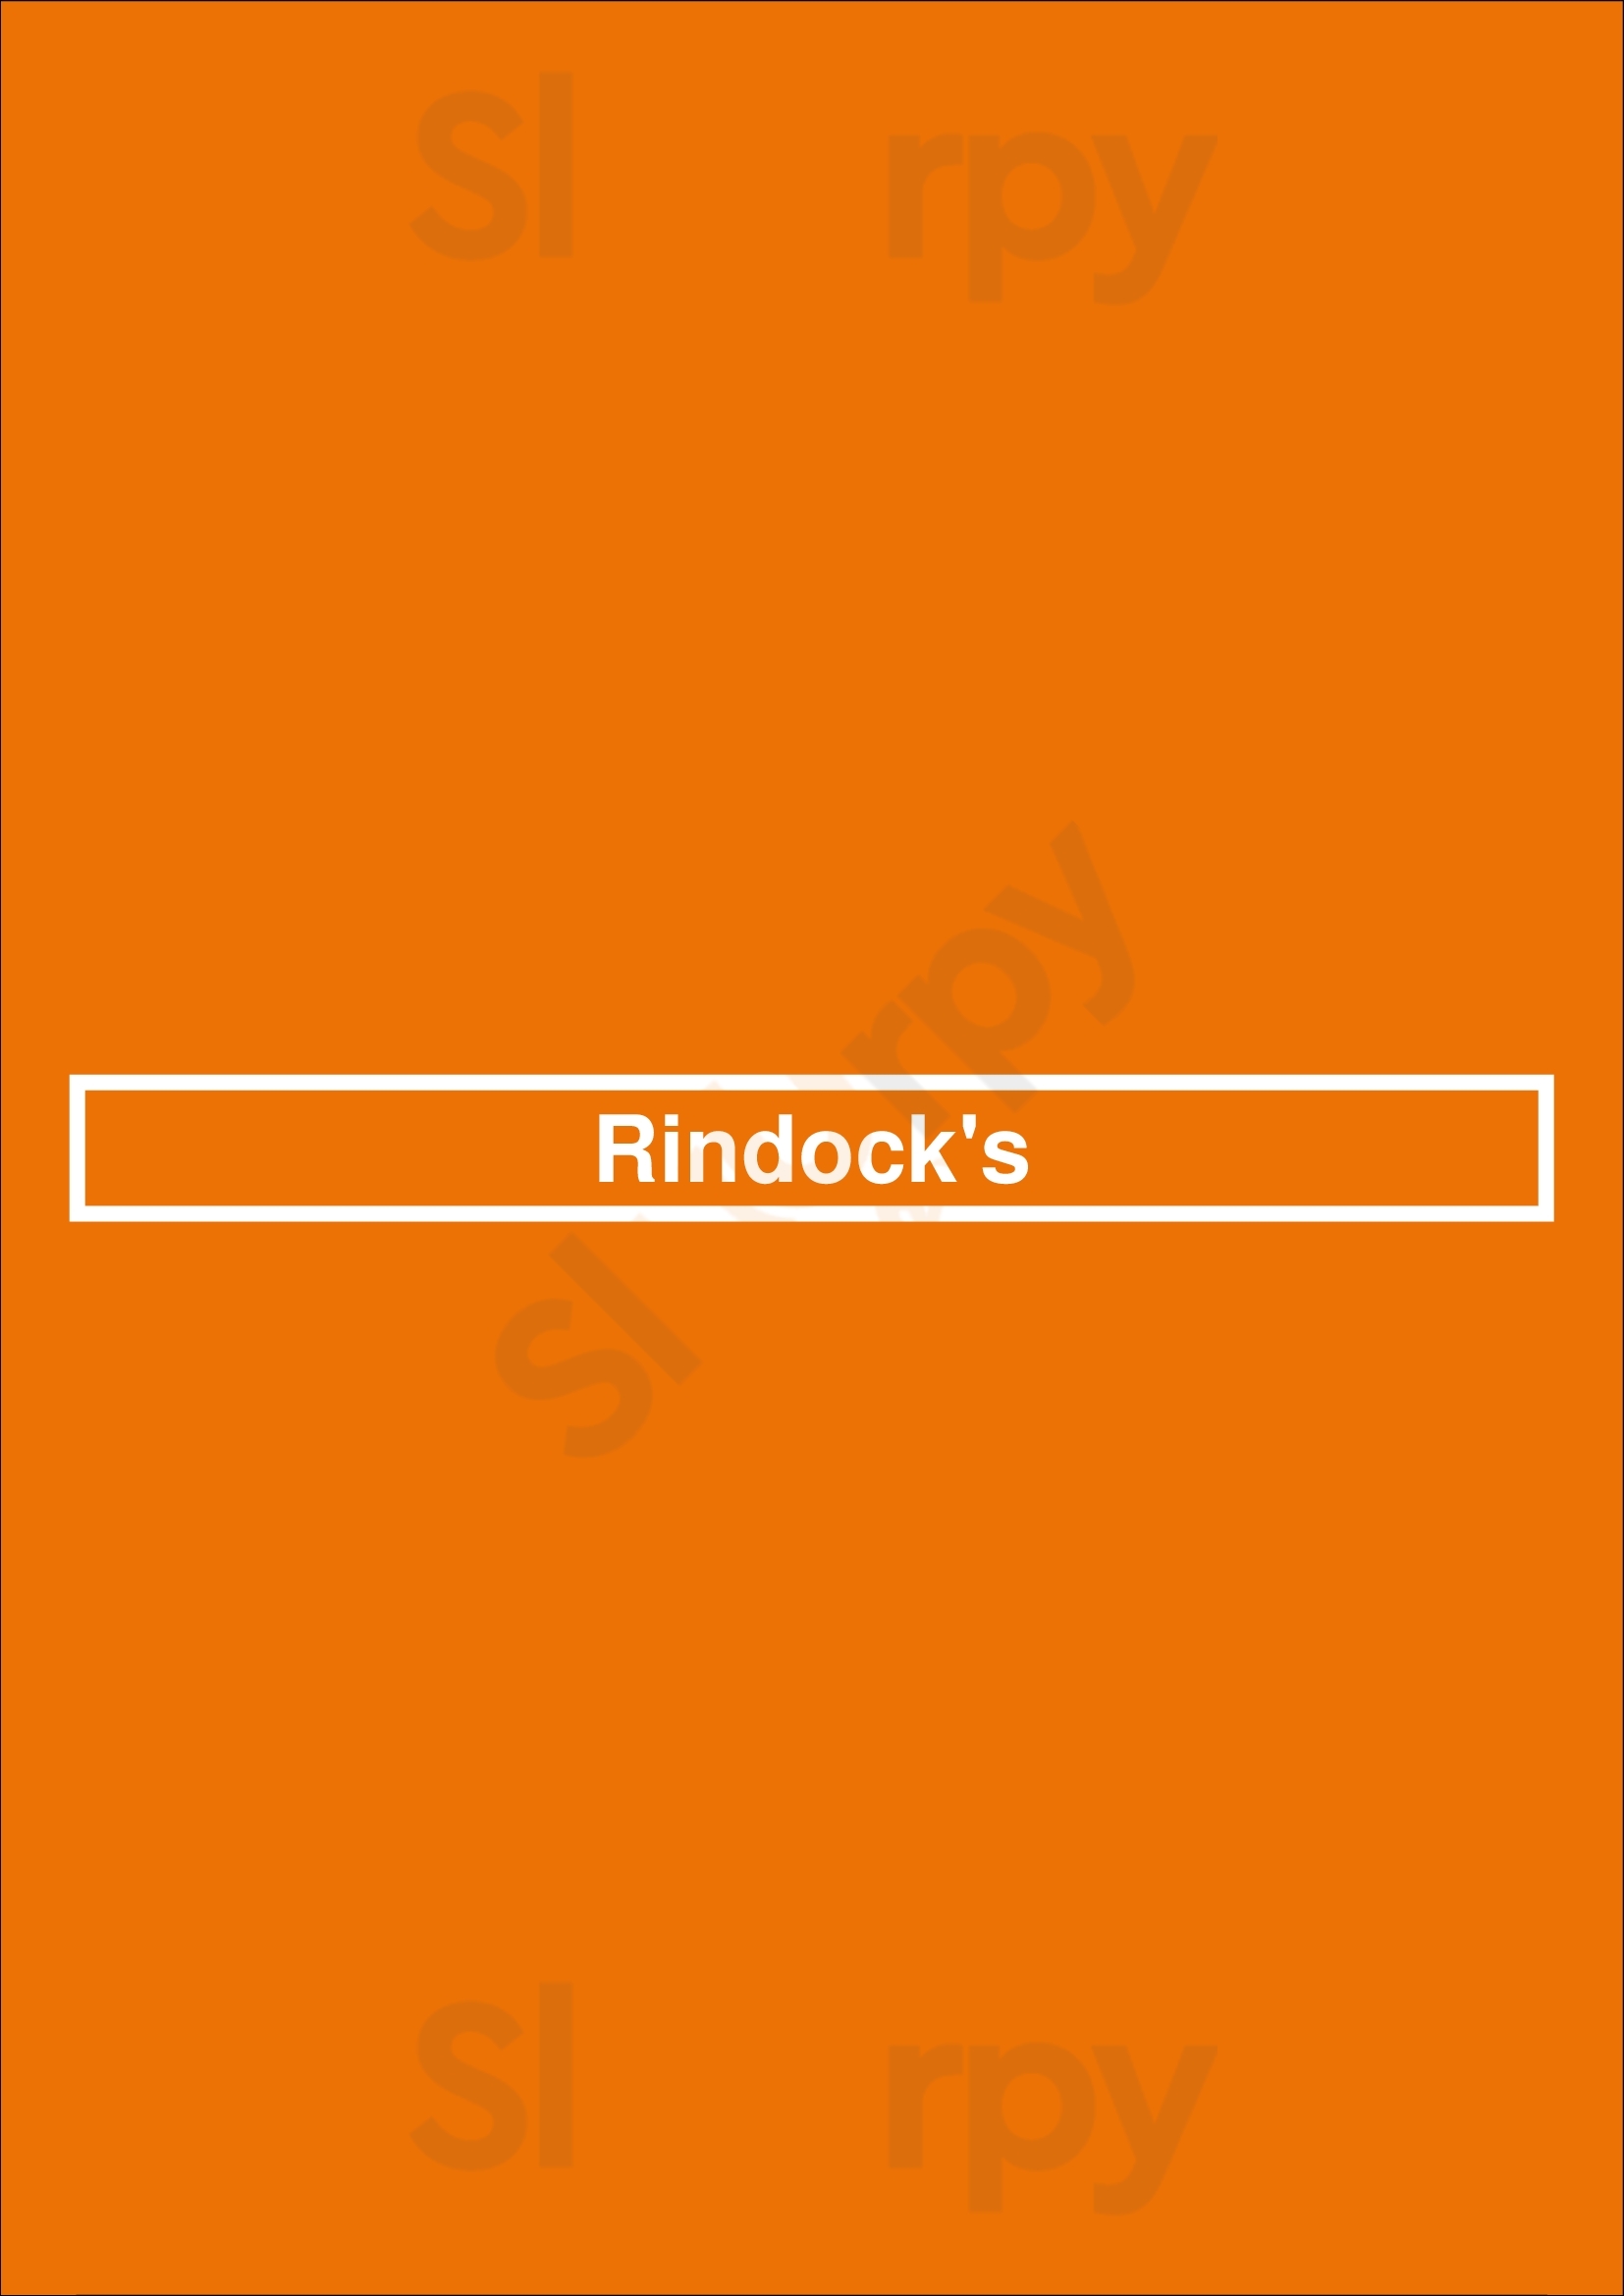 Rindock‘s Hamburg Menu - 1